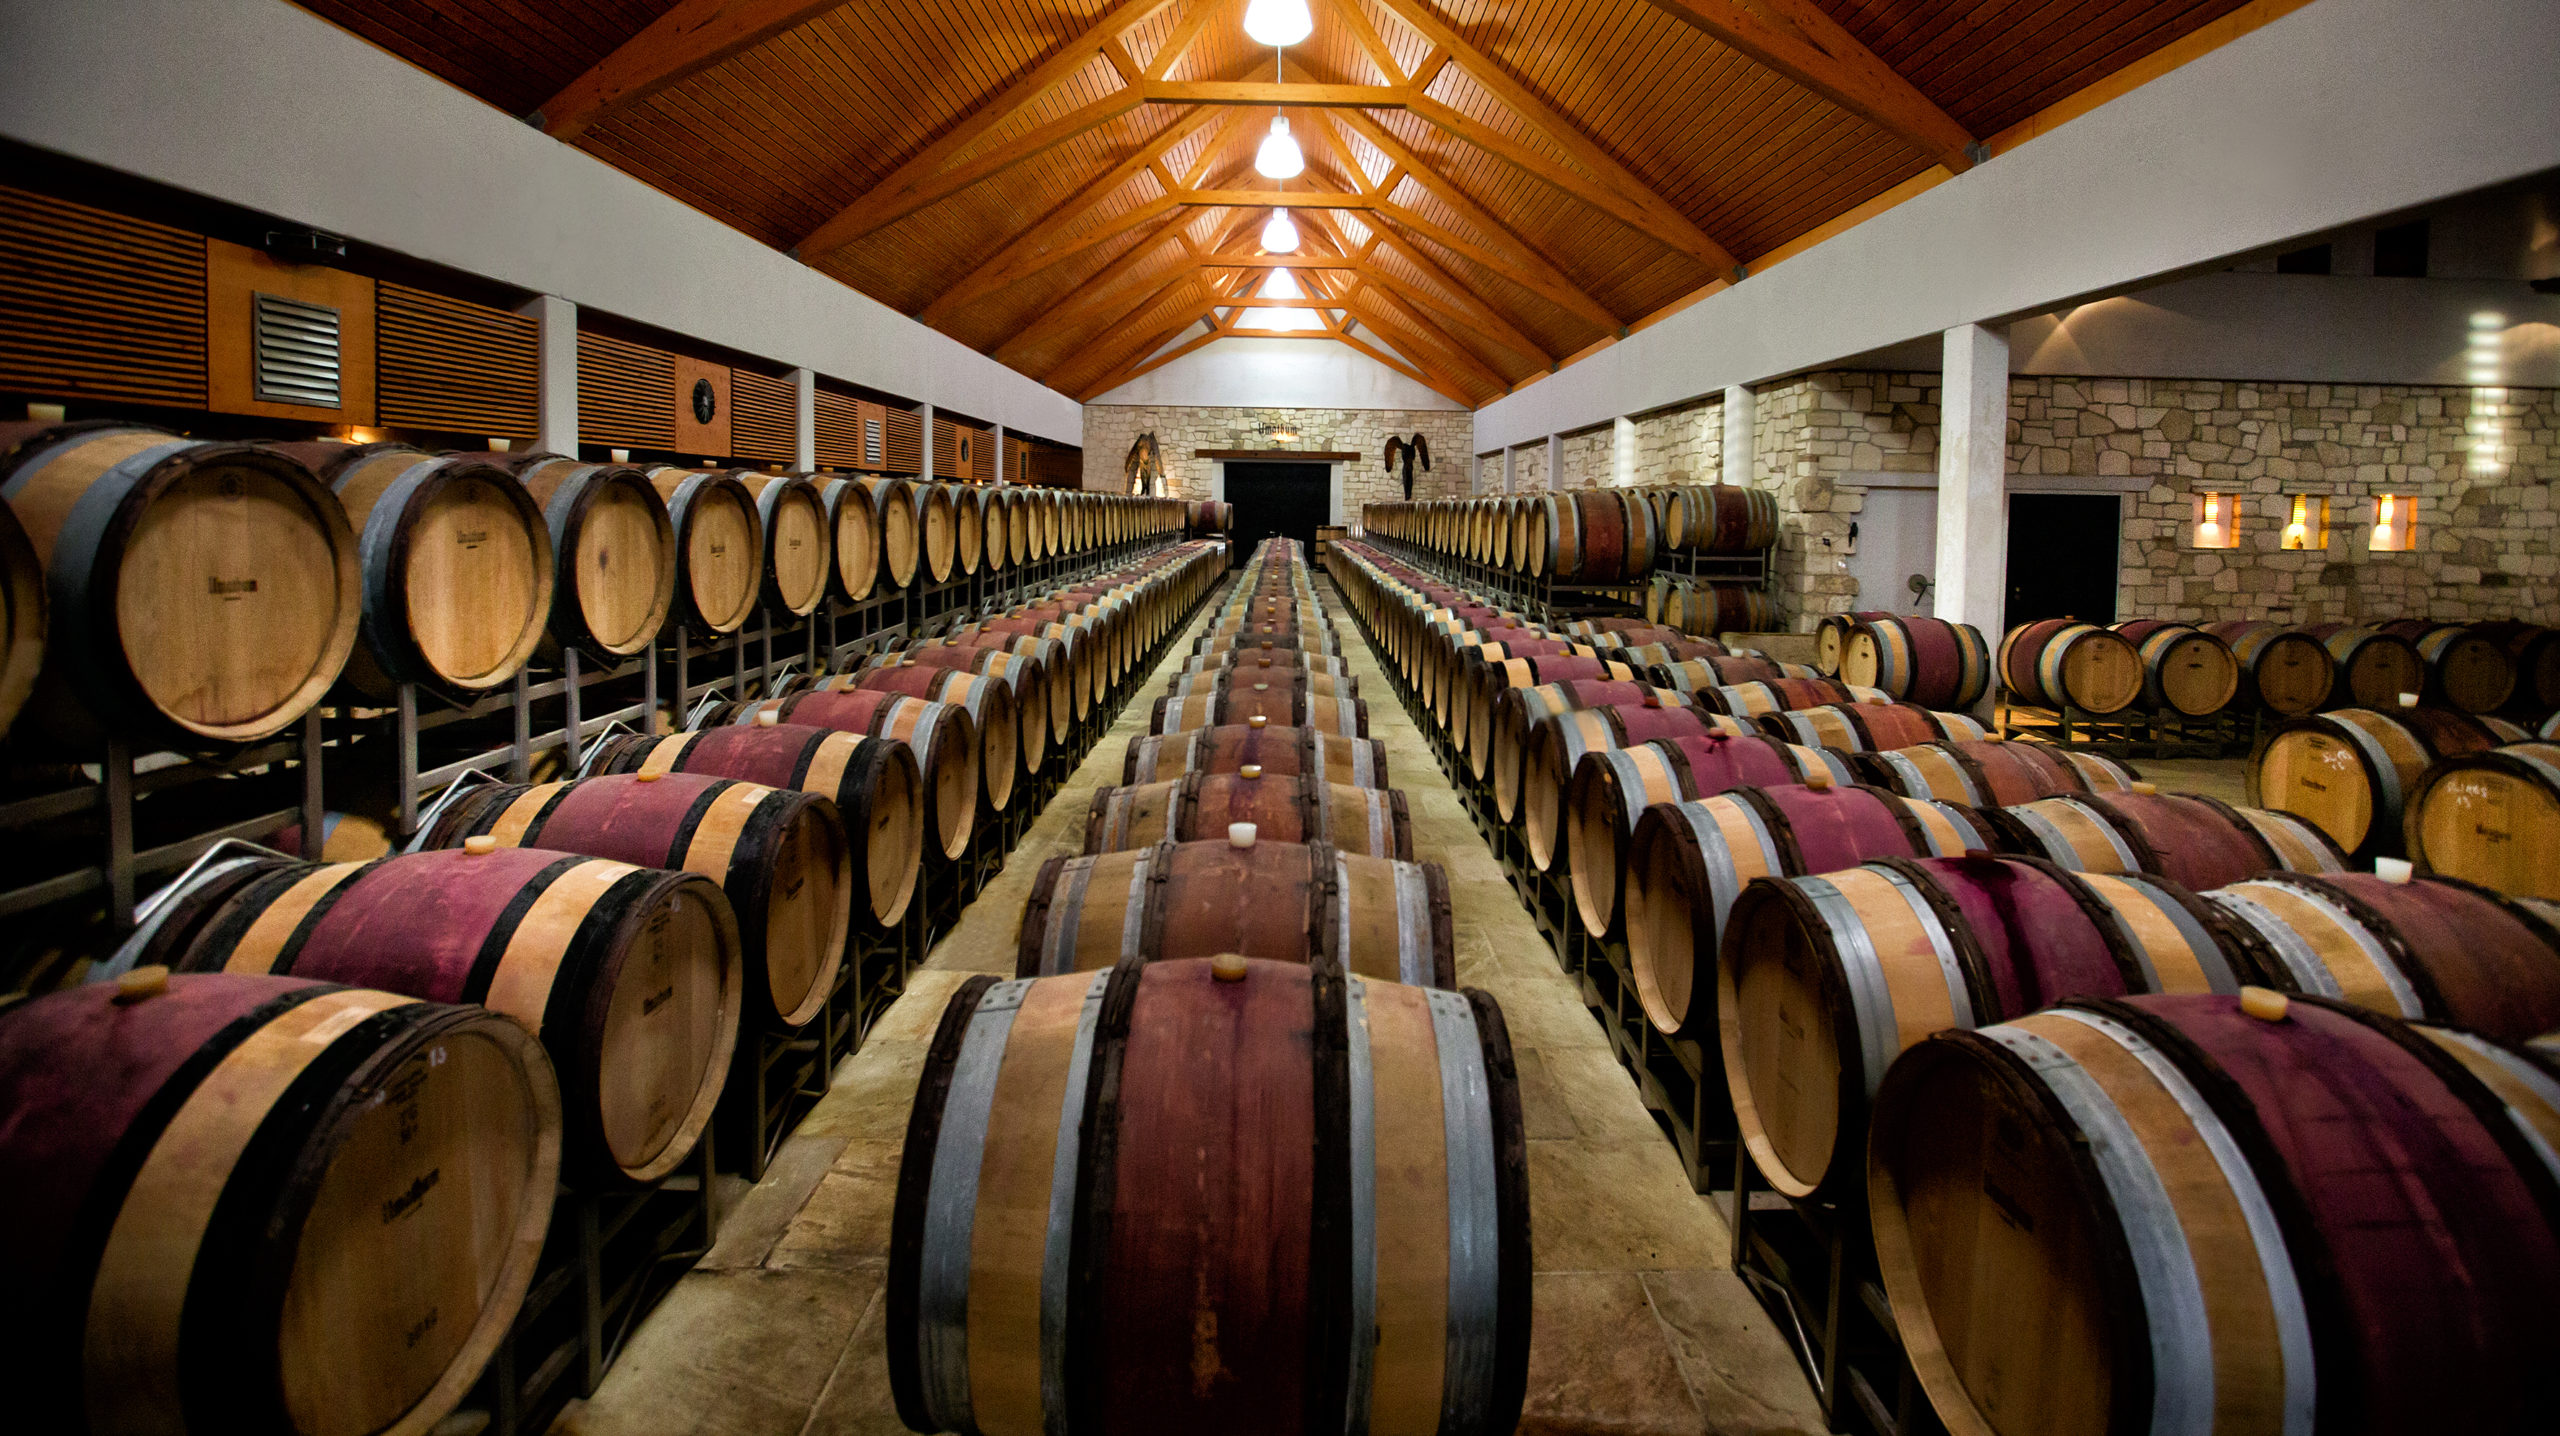 Weingut Umathum in Austria, Europe | Wineries - Rated 0.9